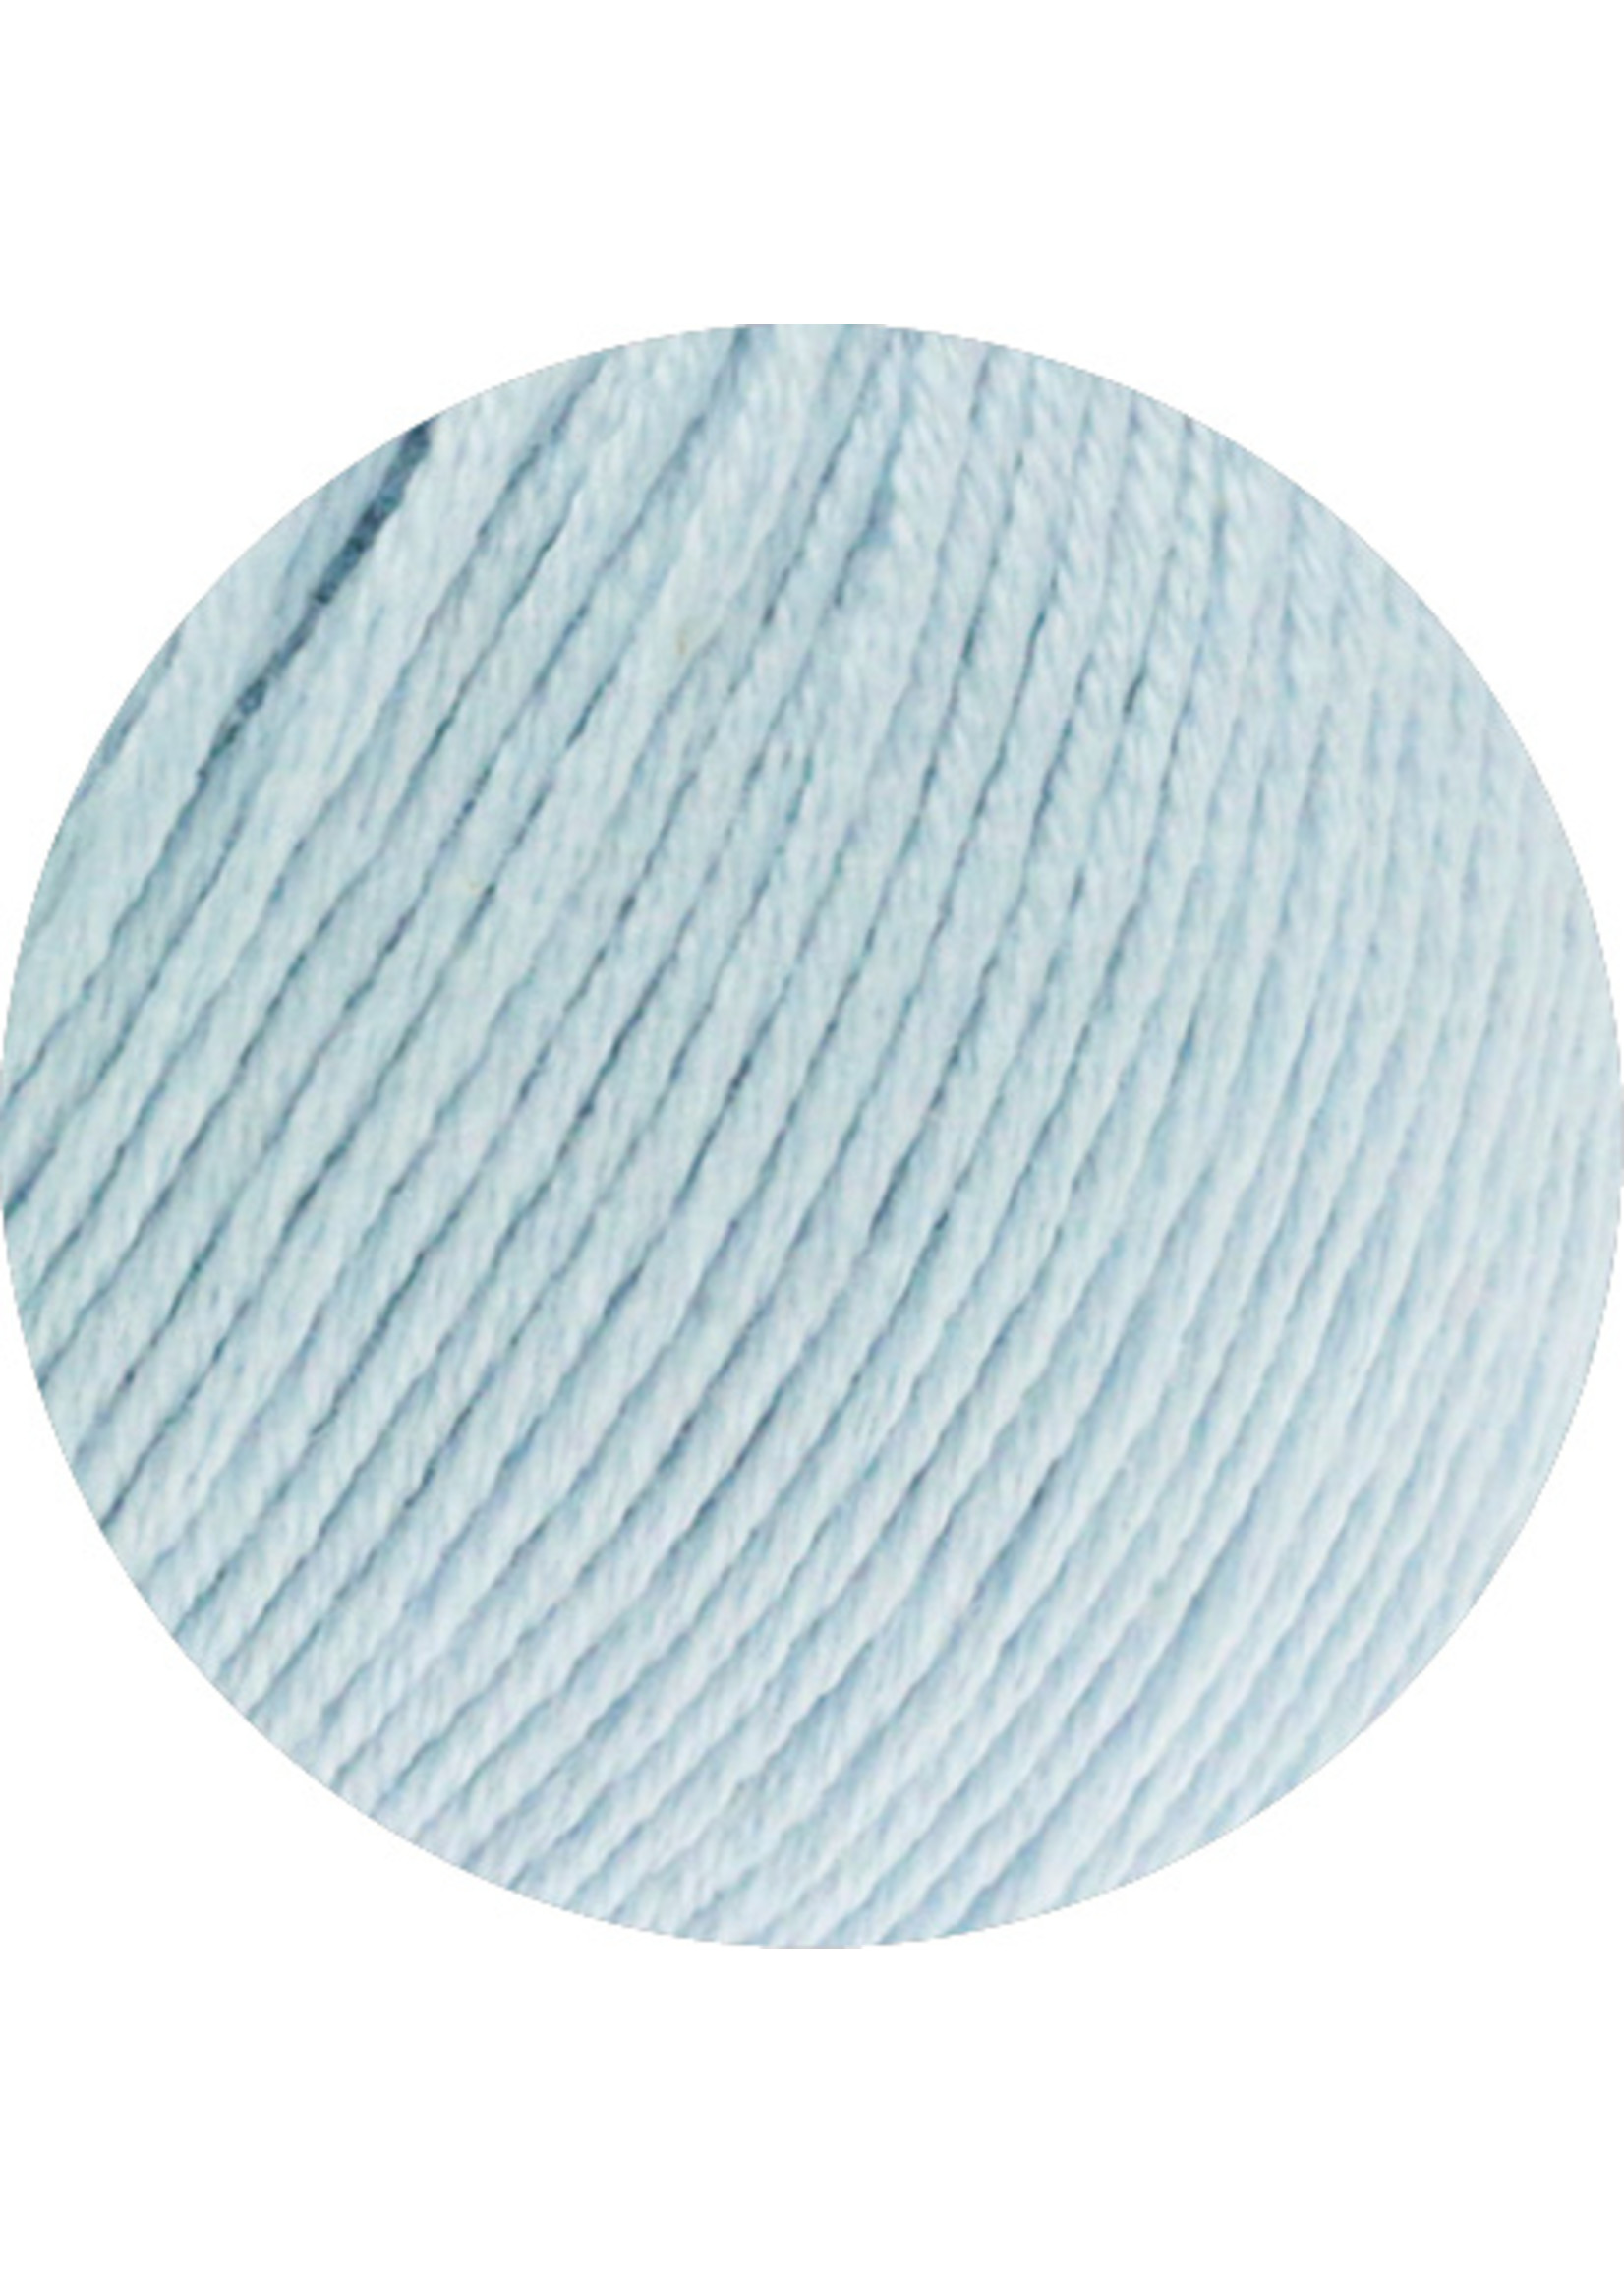 Lana Grossa Soft cotton 8 blauw